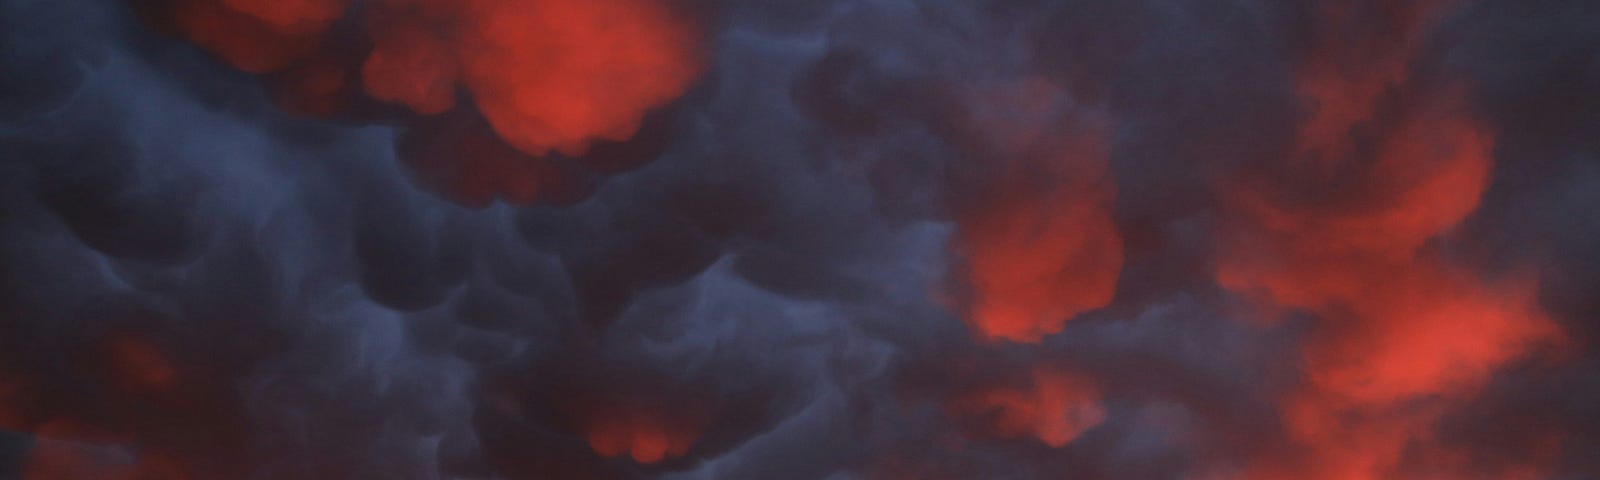 Dark smoky clouds lit up red